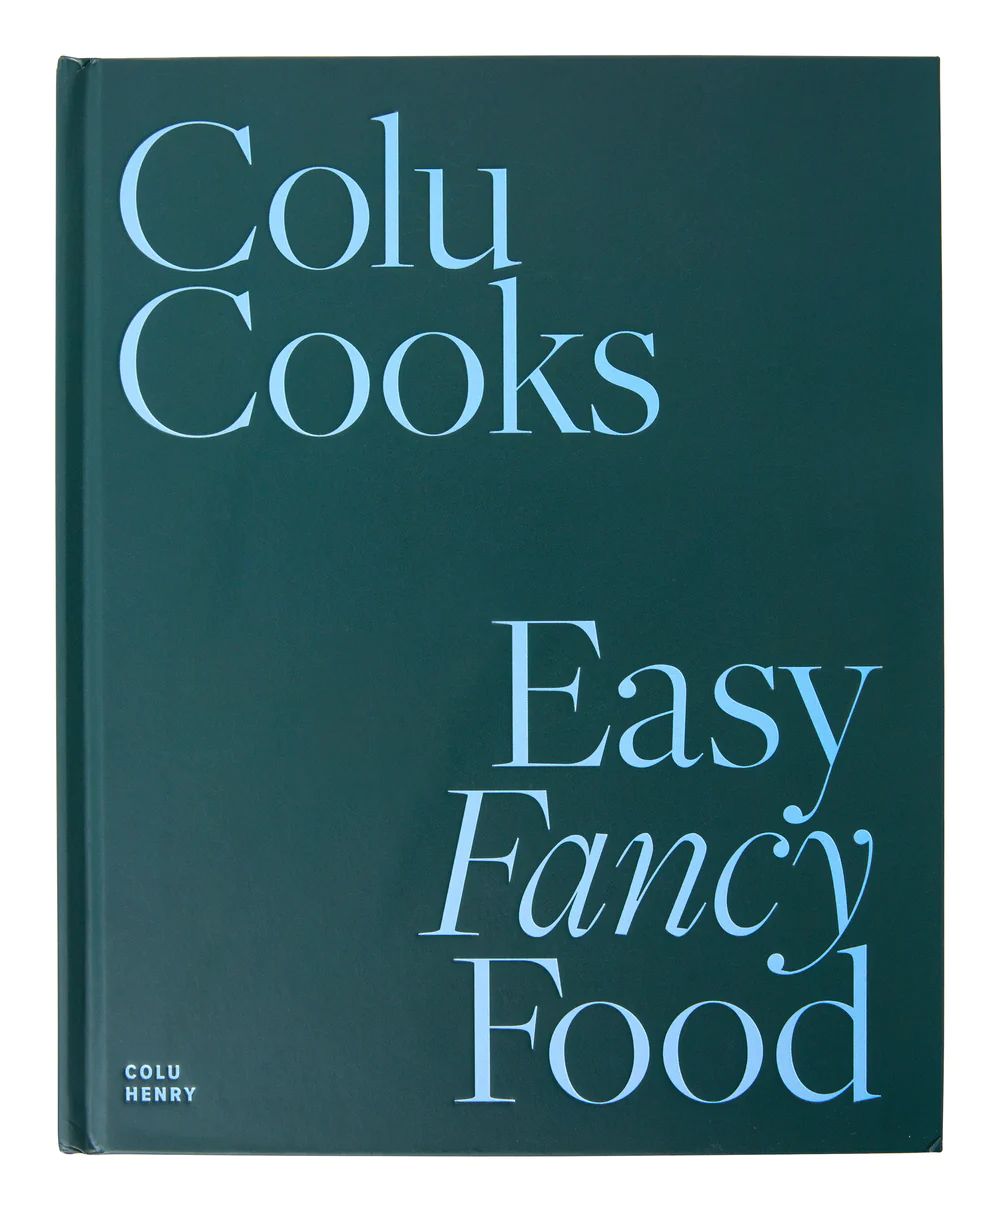 Colu Cooks: Easy Fancy Food | Jayson Home